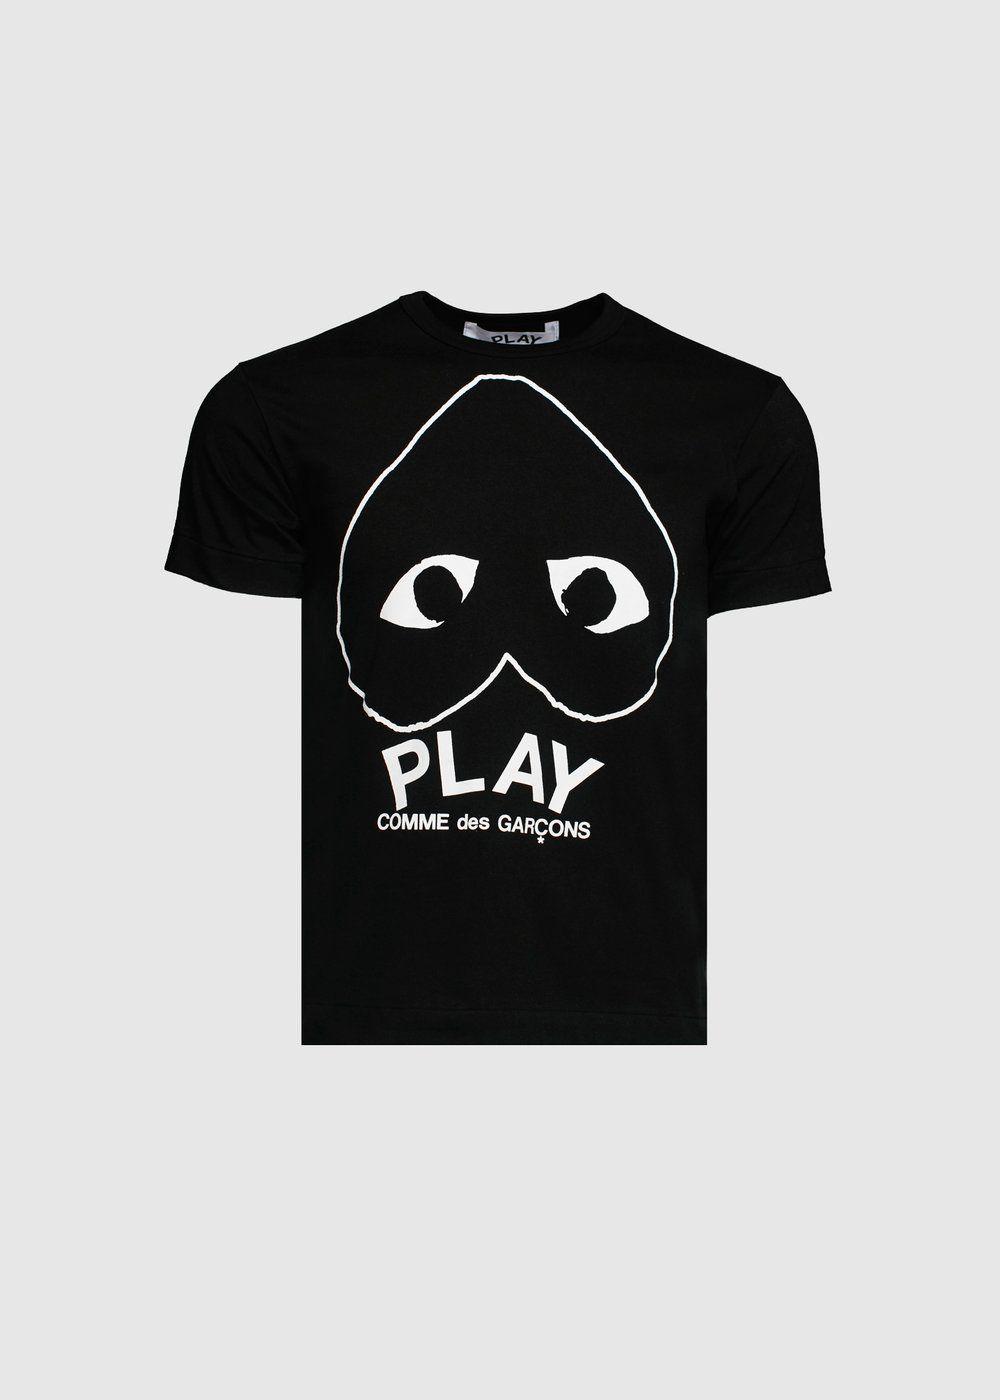 CDG Play Logo - CDG Play: Upside Down Heart T-Shirt [Black] – Social Status